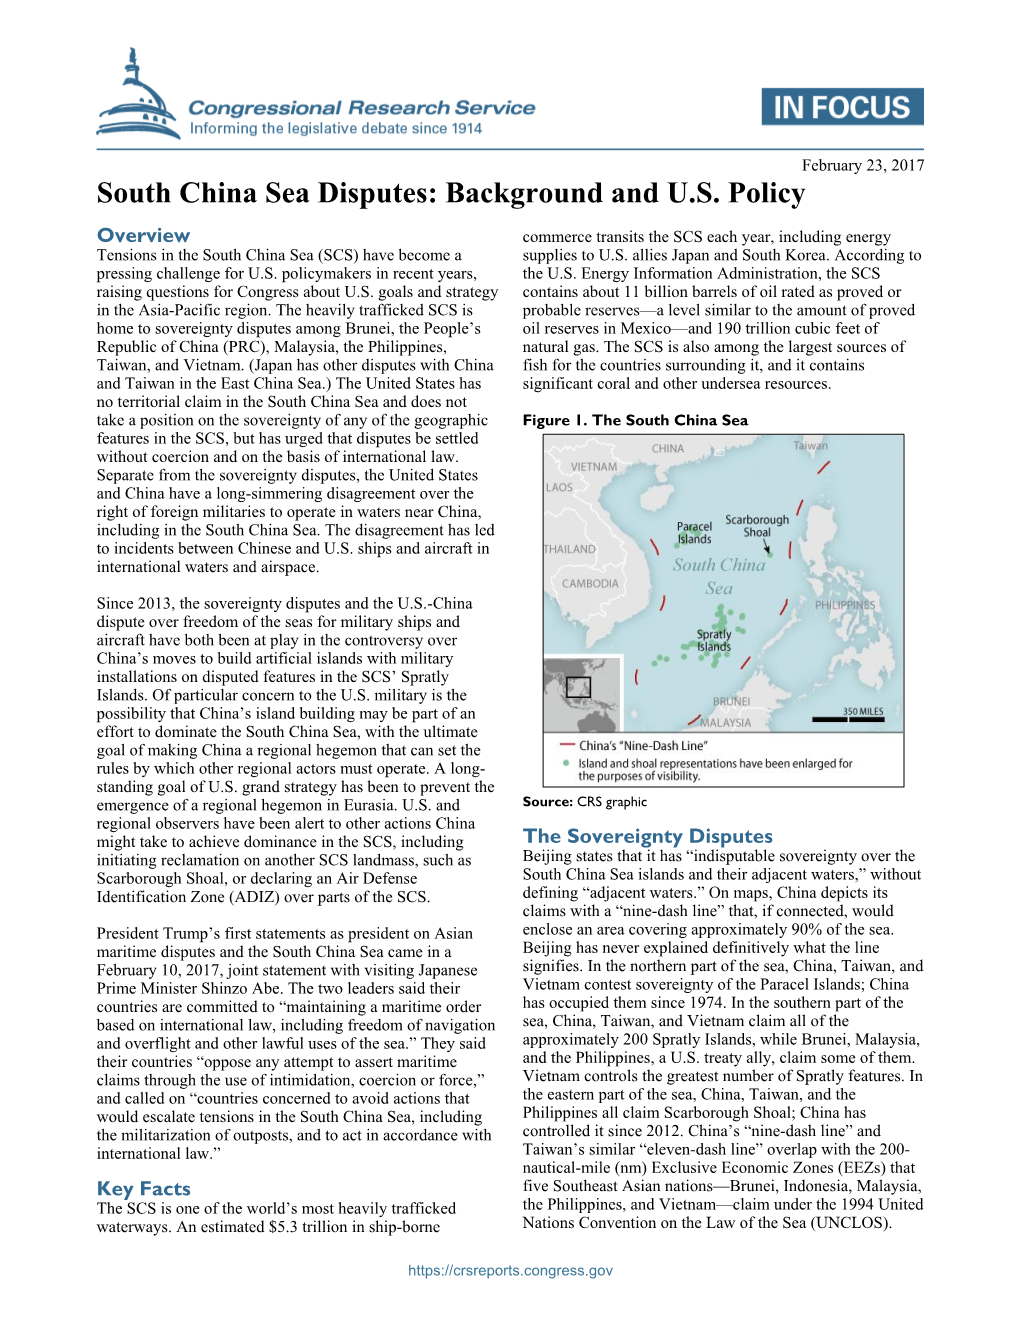 South China Sea Disputes: Background and U.S